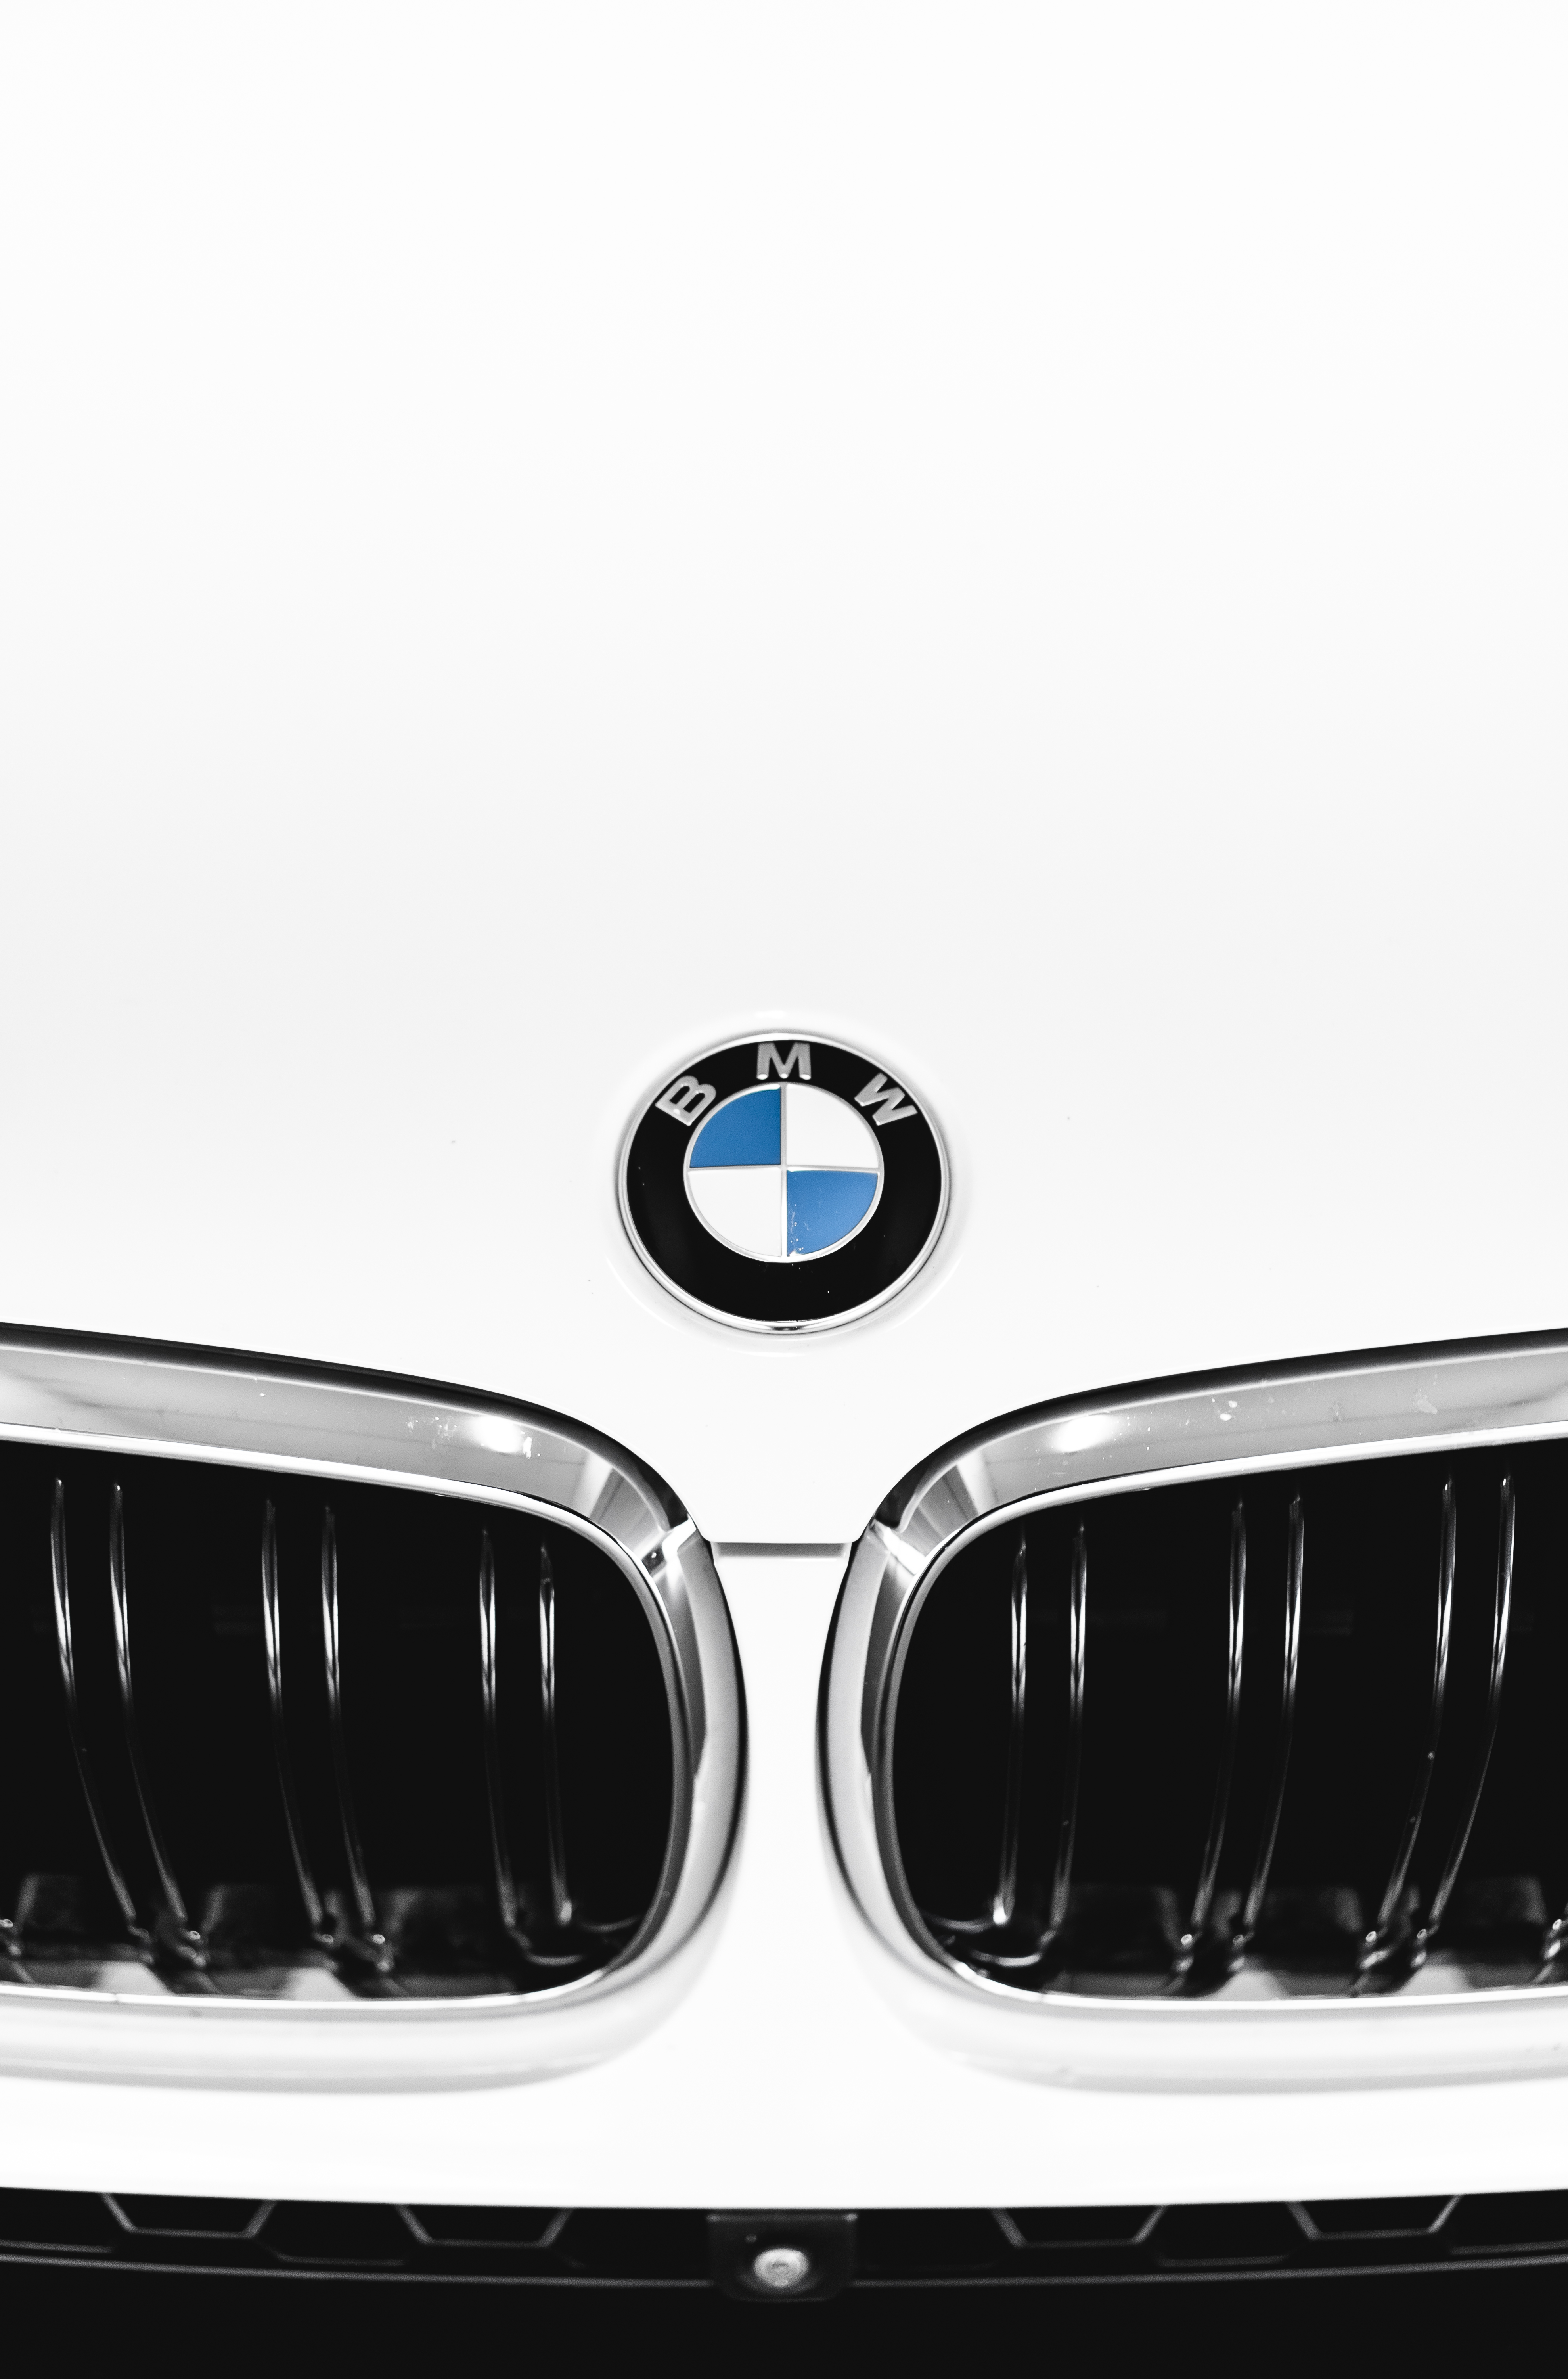 BMW Car Bonnet Badge Free Stock Photo